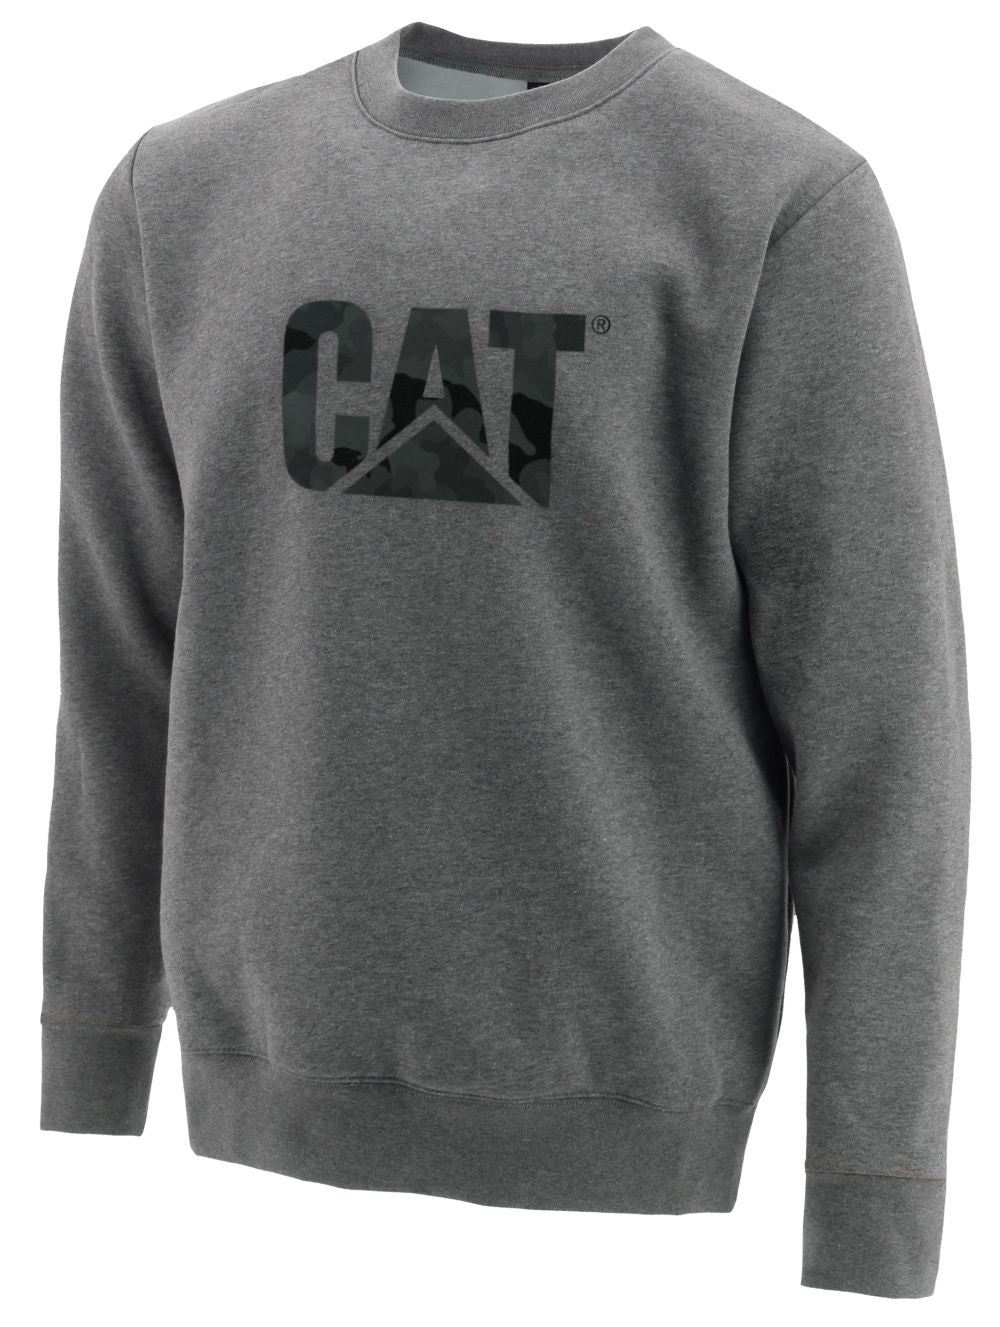 'Caterpillar' Men's Trademark Logo Crew Sweatshirt - Dark Heather Grey